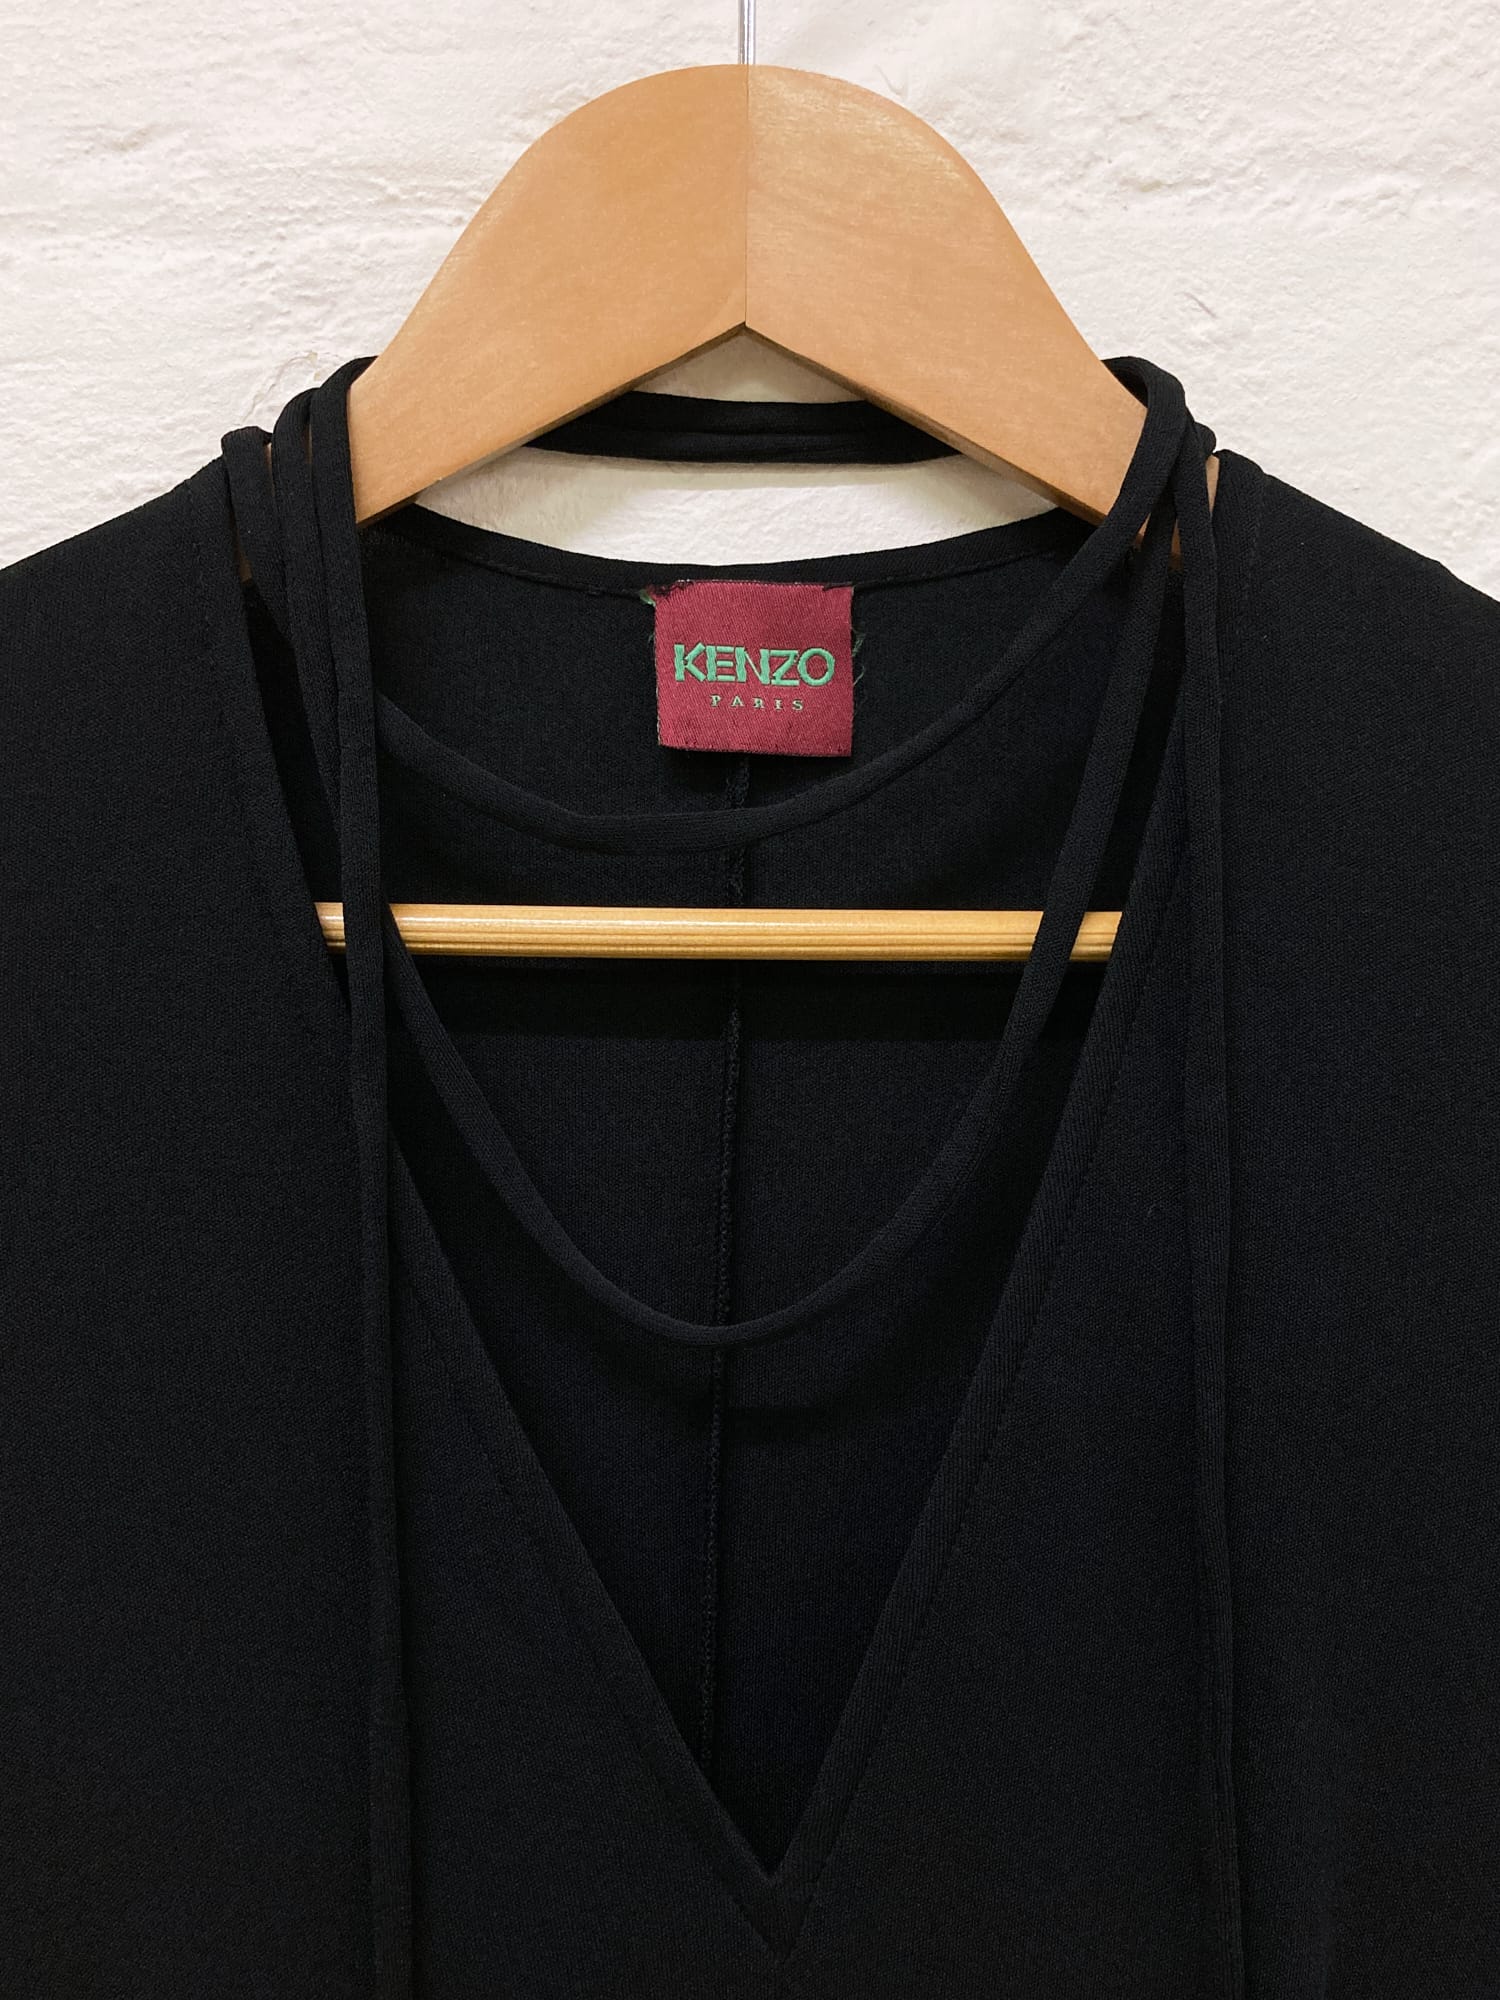 Kenzo Paris 1990s black knit v-neck maxi dress with ties